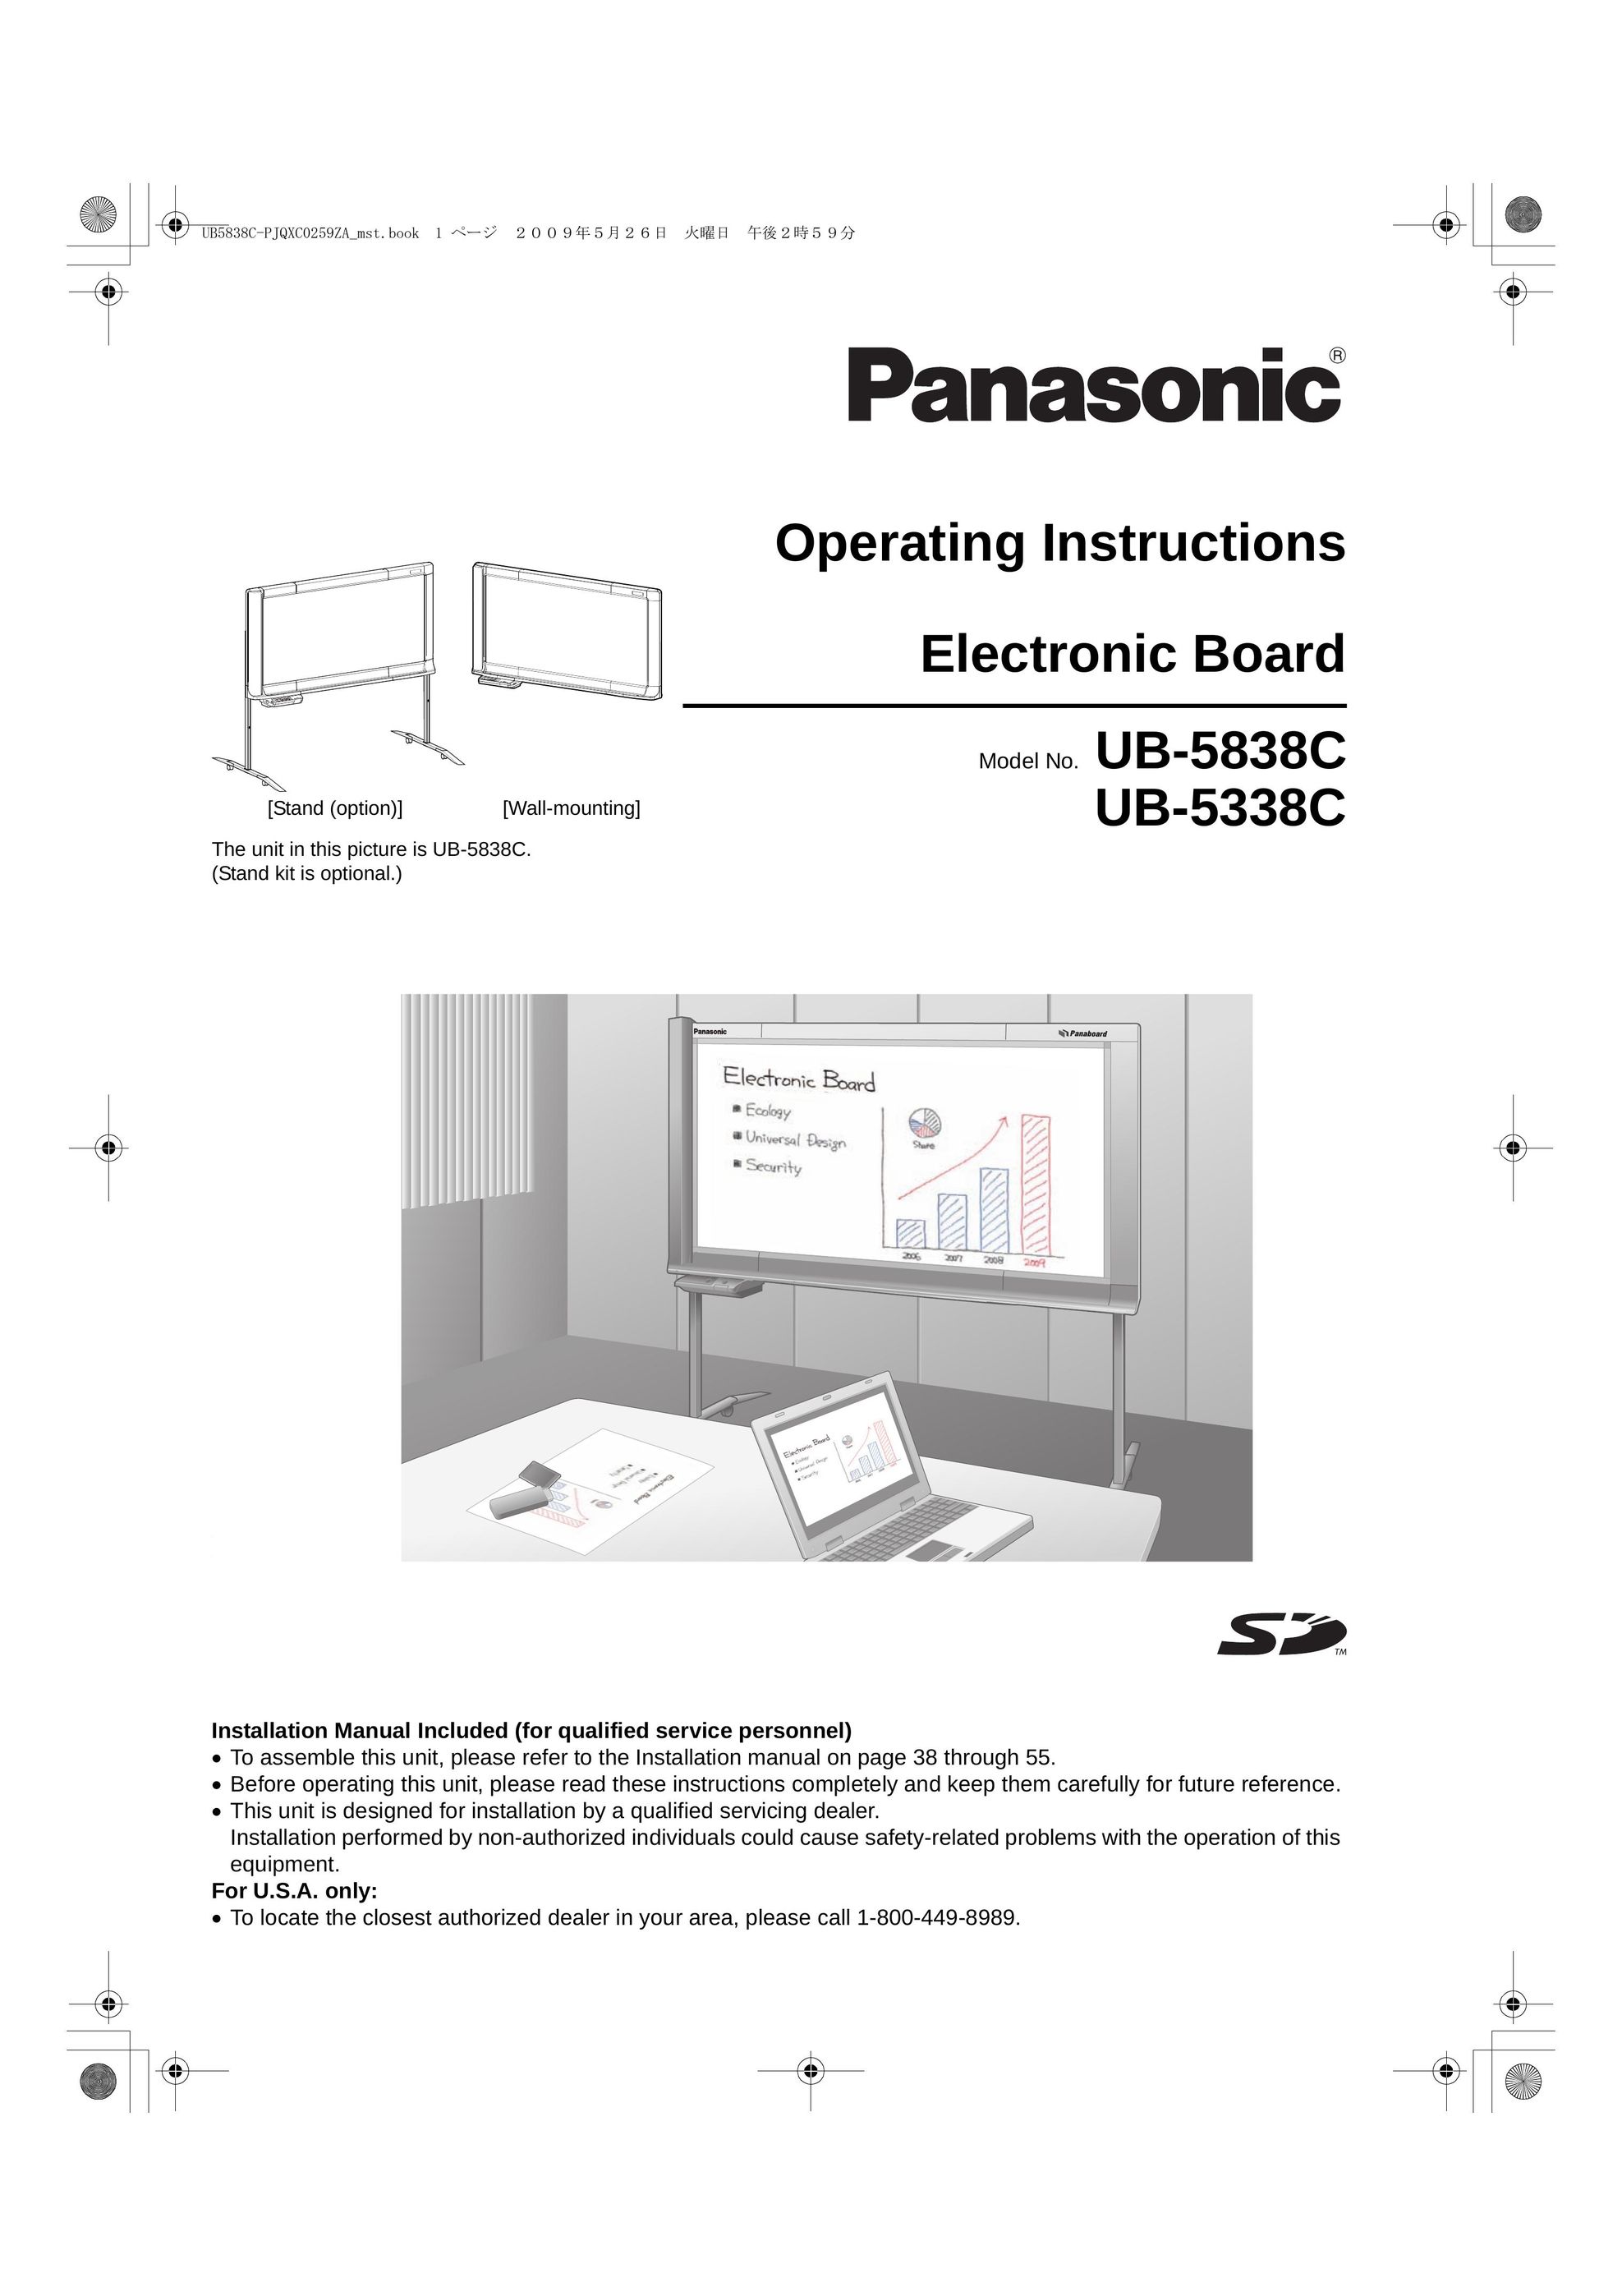 Panasonic UB-5338C Projector Accessories User Manual